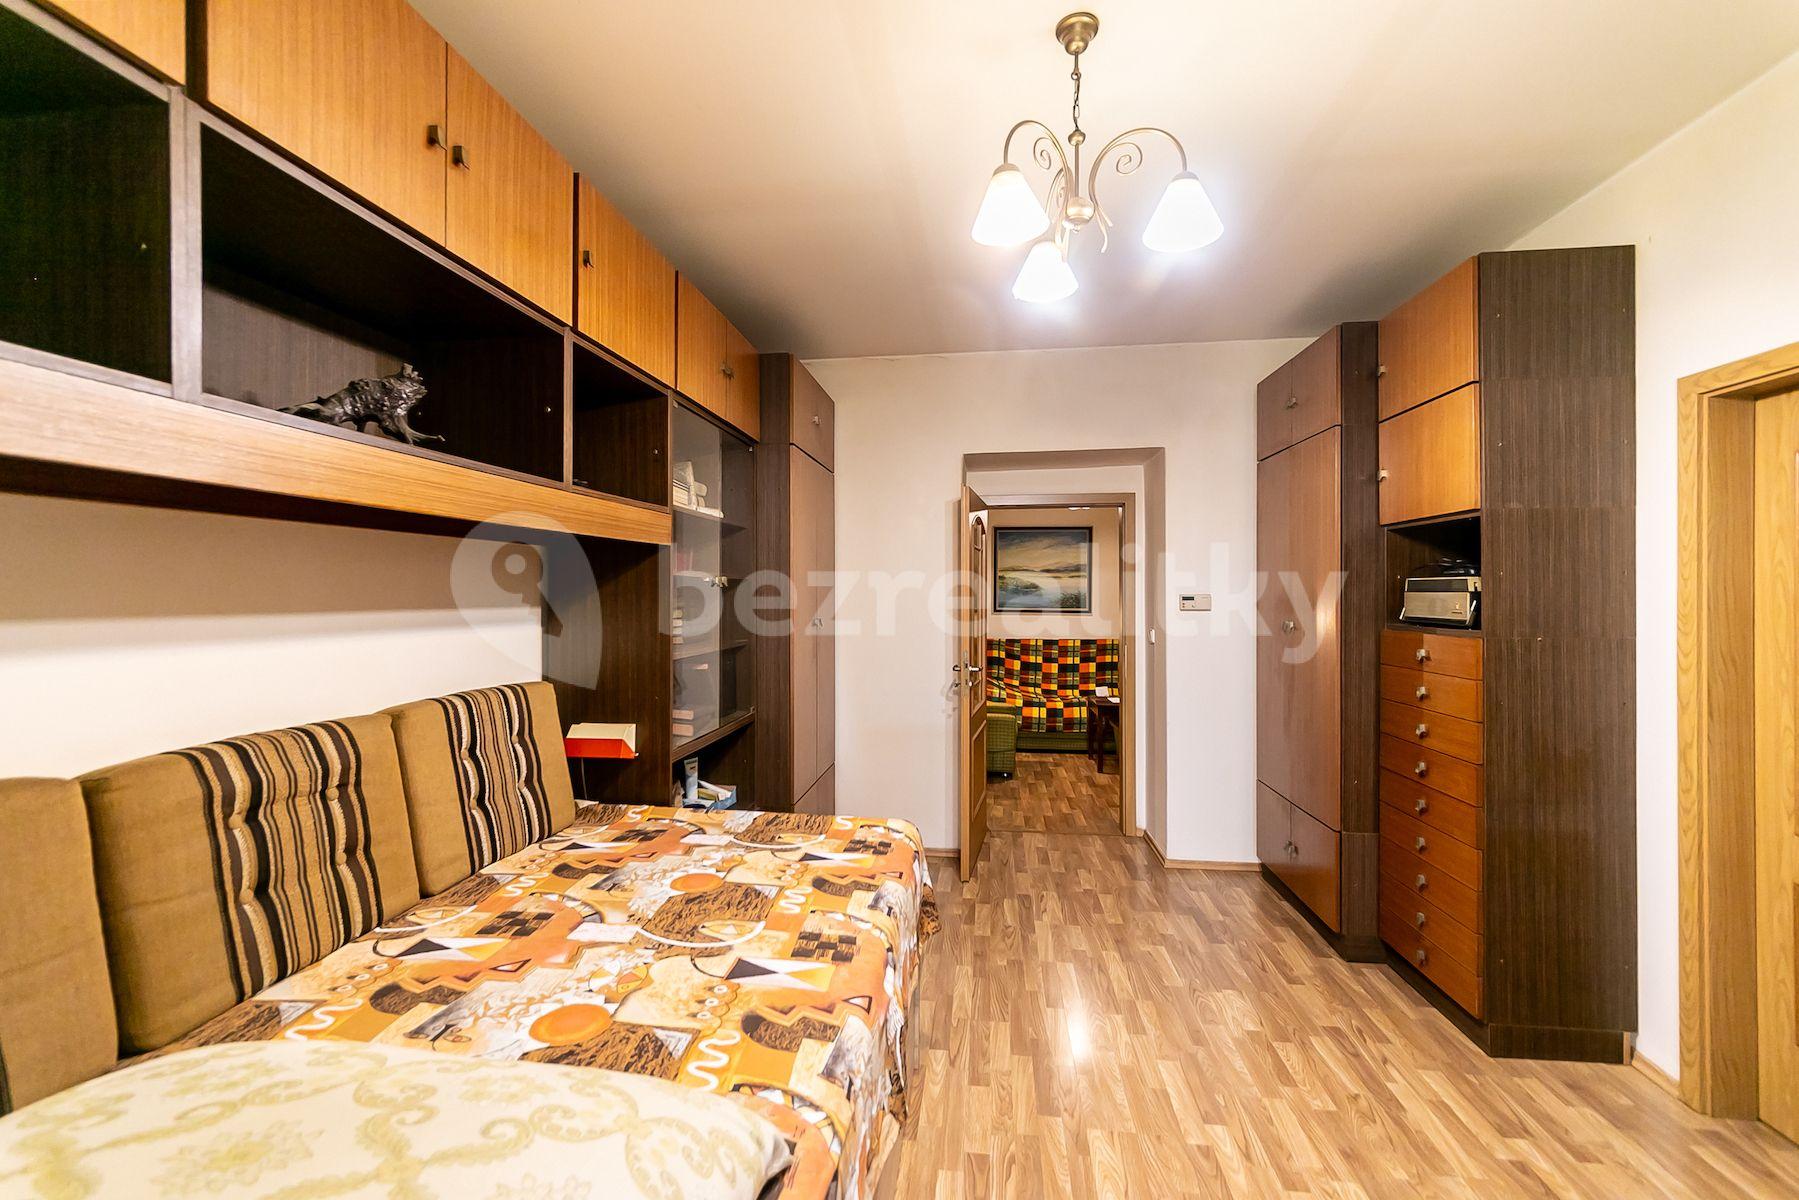 1 bedroom with open-plan kitchen flat for sale, 46 m², Eliášova, Prague, Prague